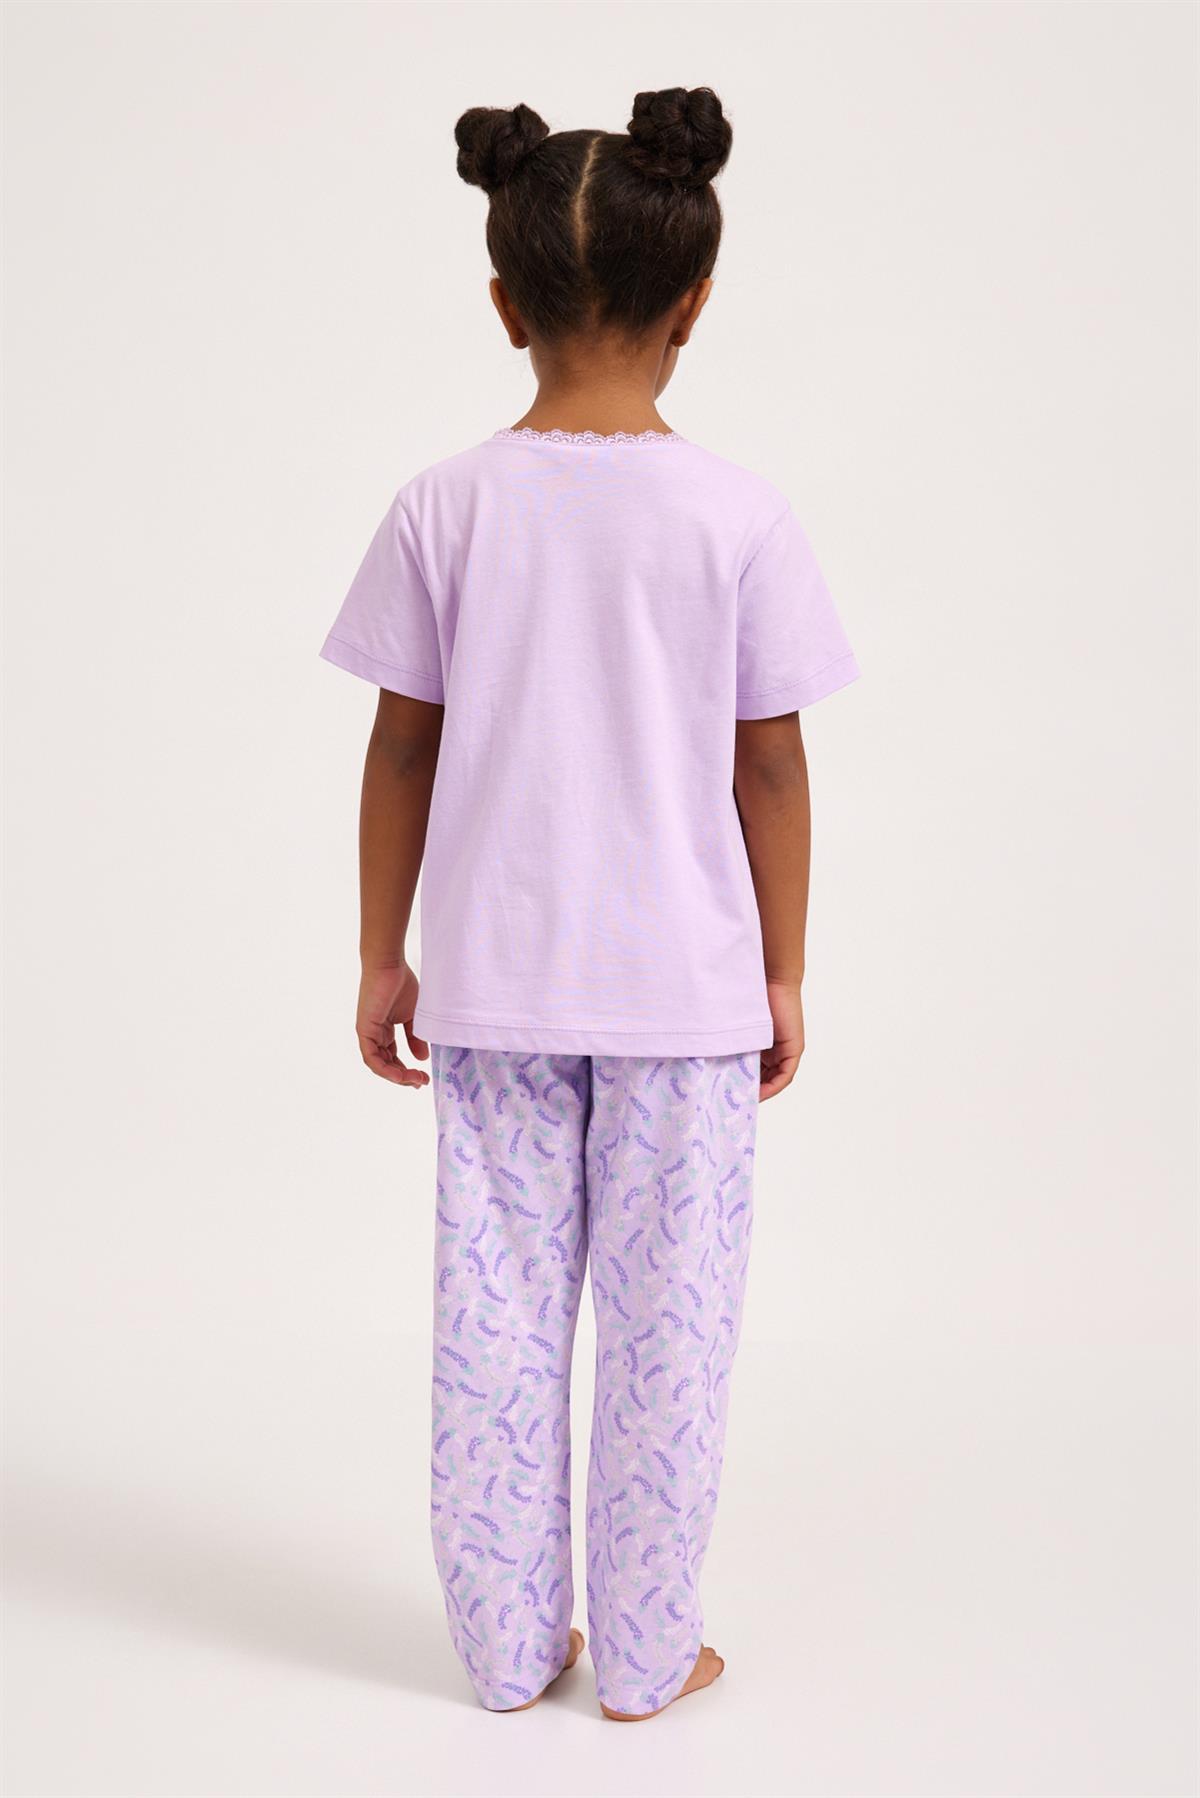 Lavender Kedi Baskı Kız Çocuk T-Shirt LILAC